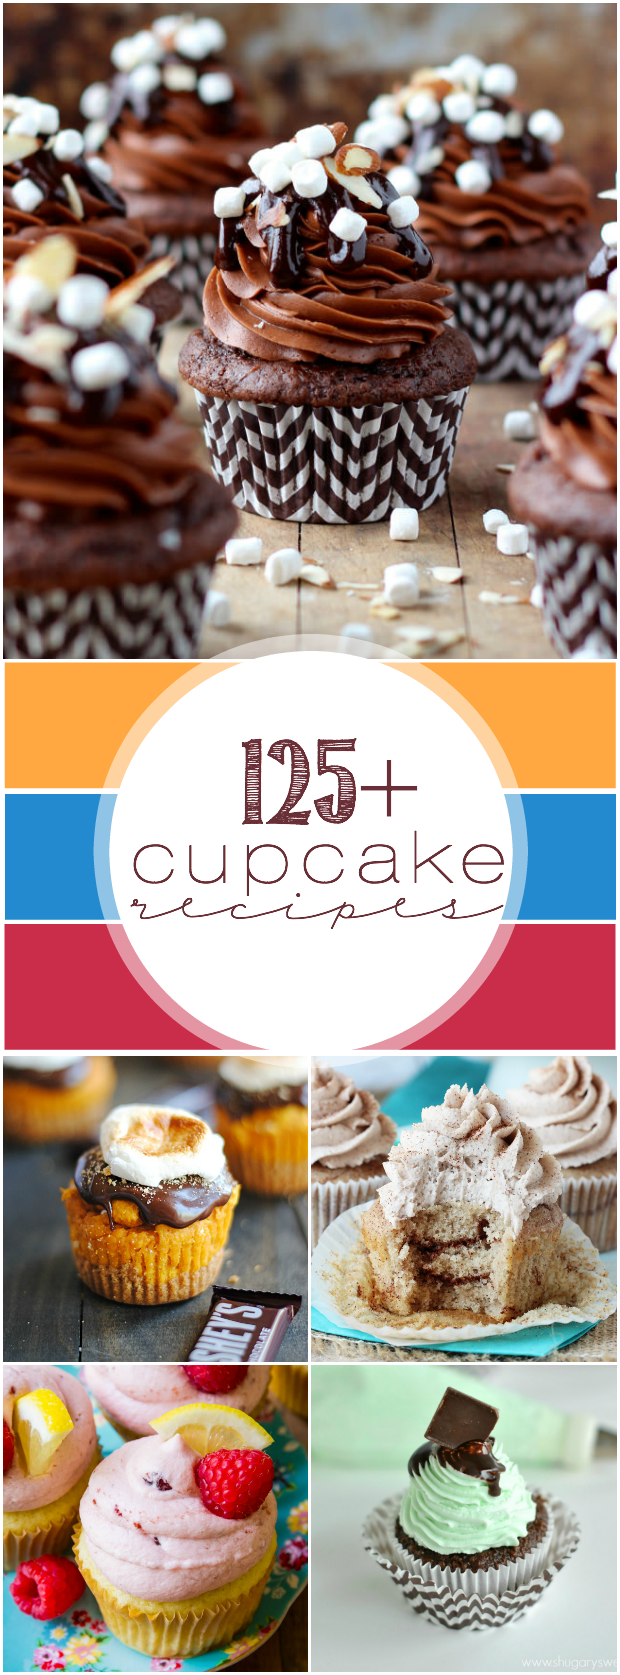 125+ Cupcake Recipes